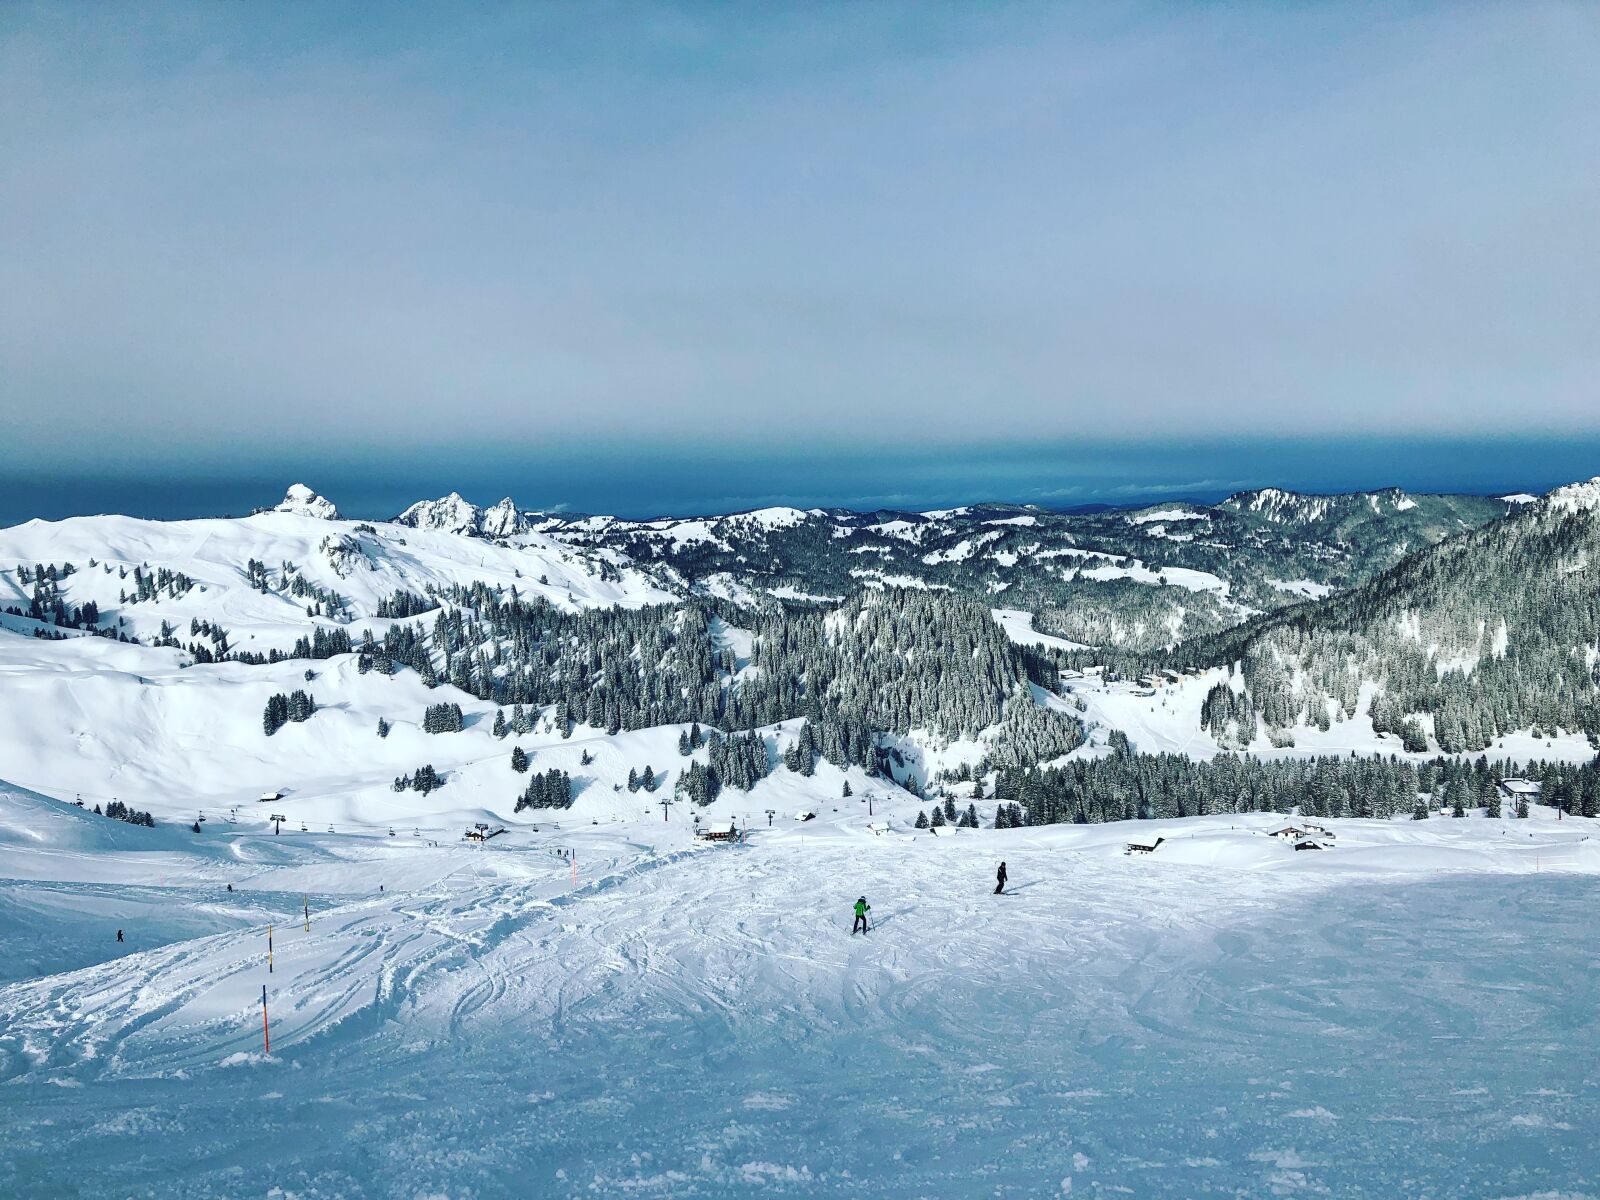 Apple iPhone 8 Plus sample photo. Skiing, ski, nature photography